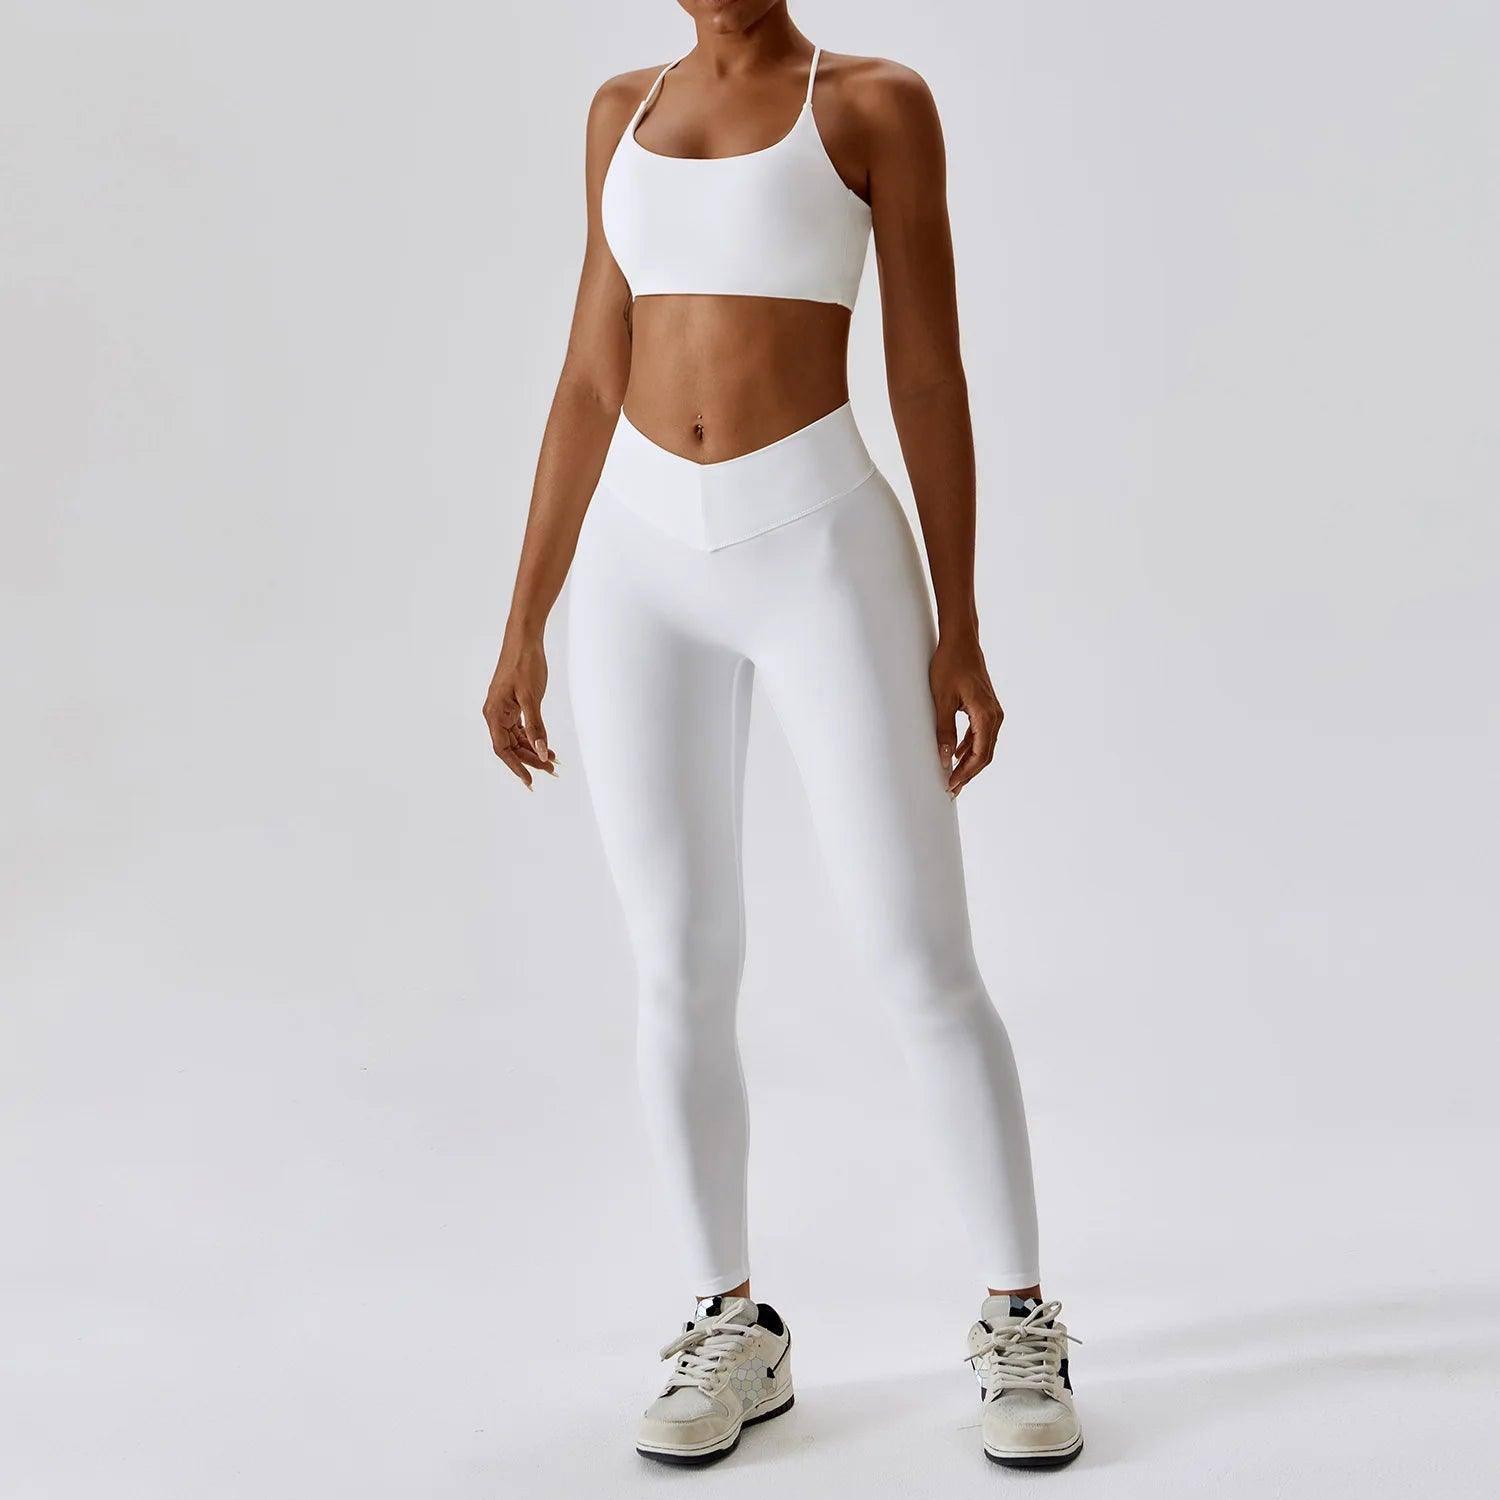 Women Yoga Clothing Sets Athletic Wear High Waist Leggings-Swan White-2-1